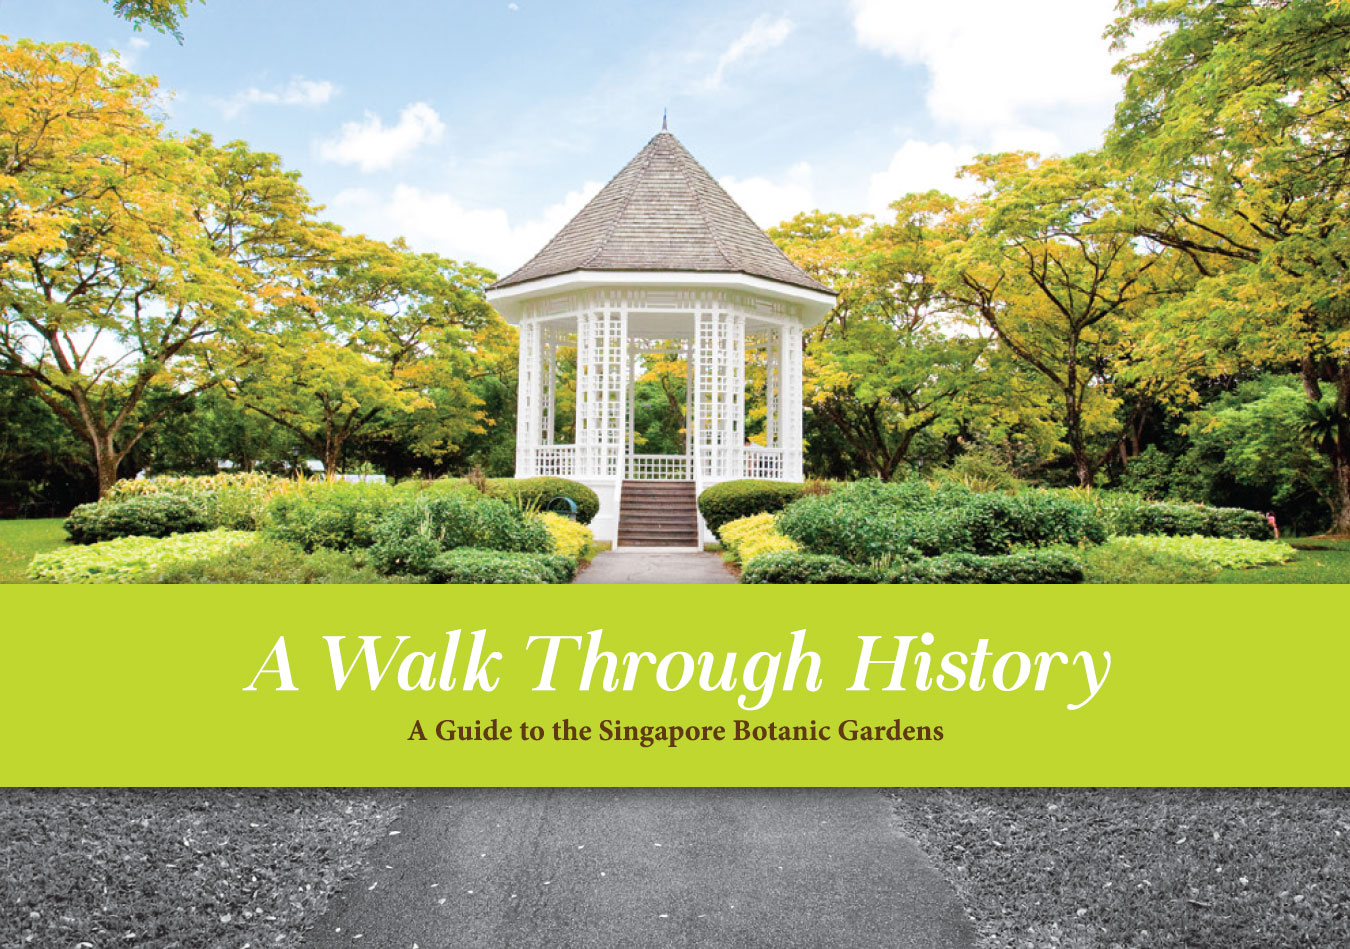 Take A Walk Through History At The Singapore Botanic Gardens